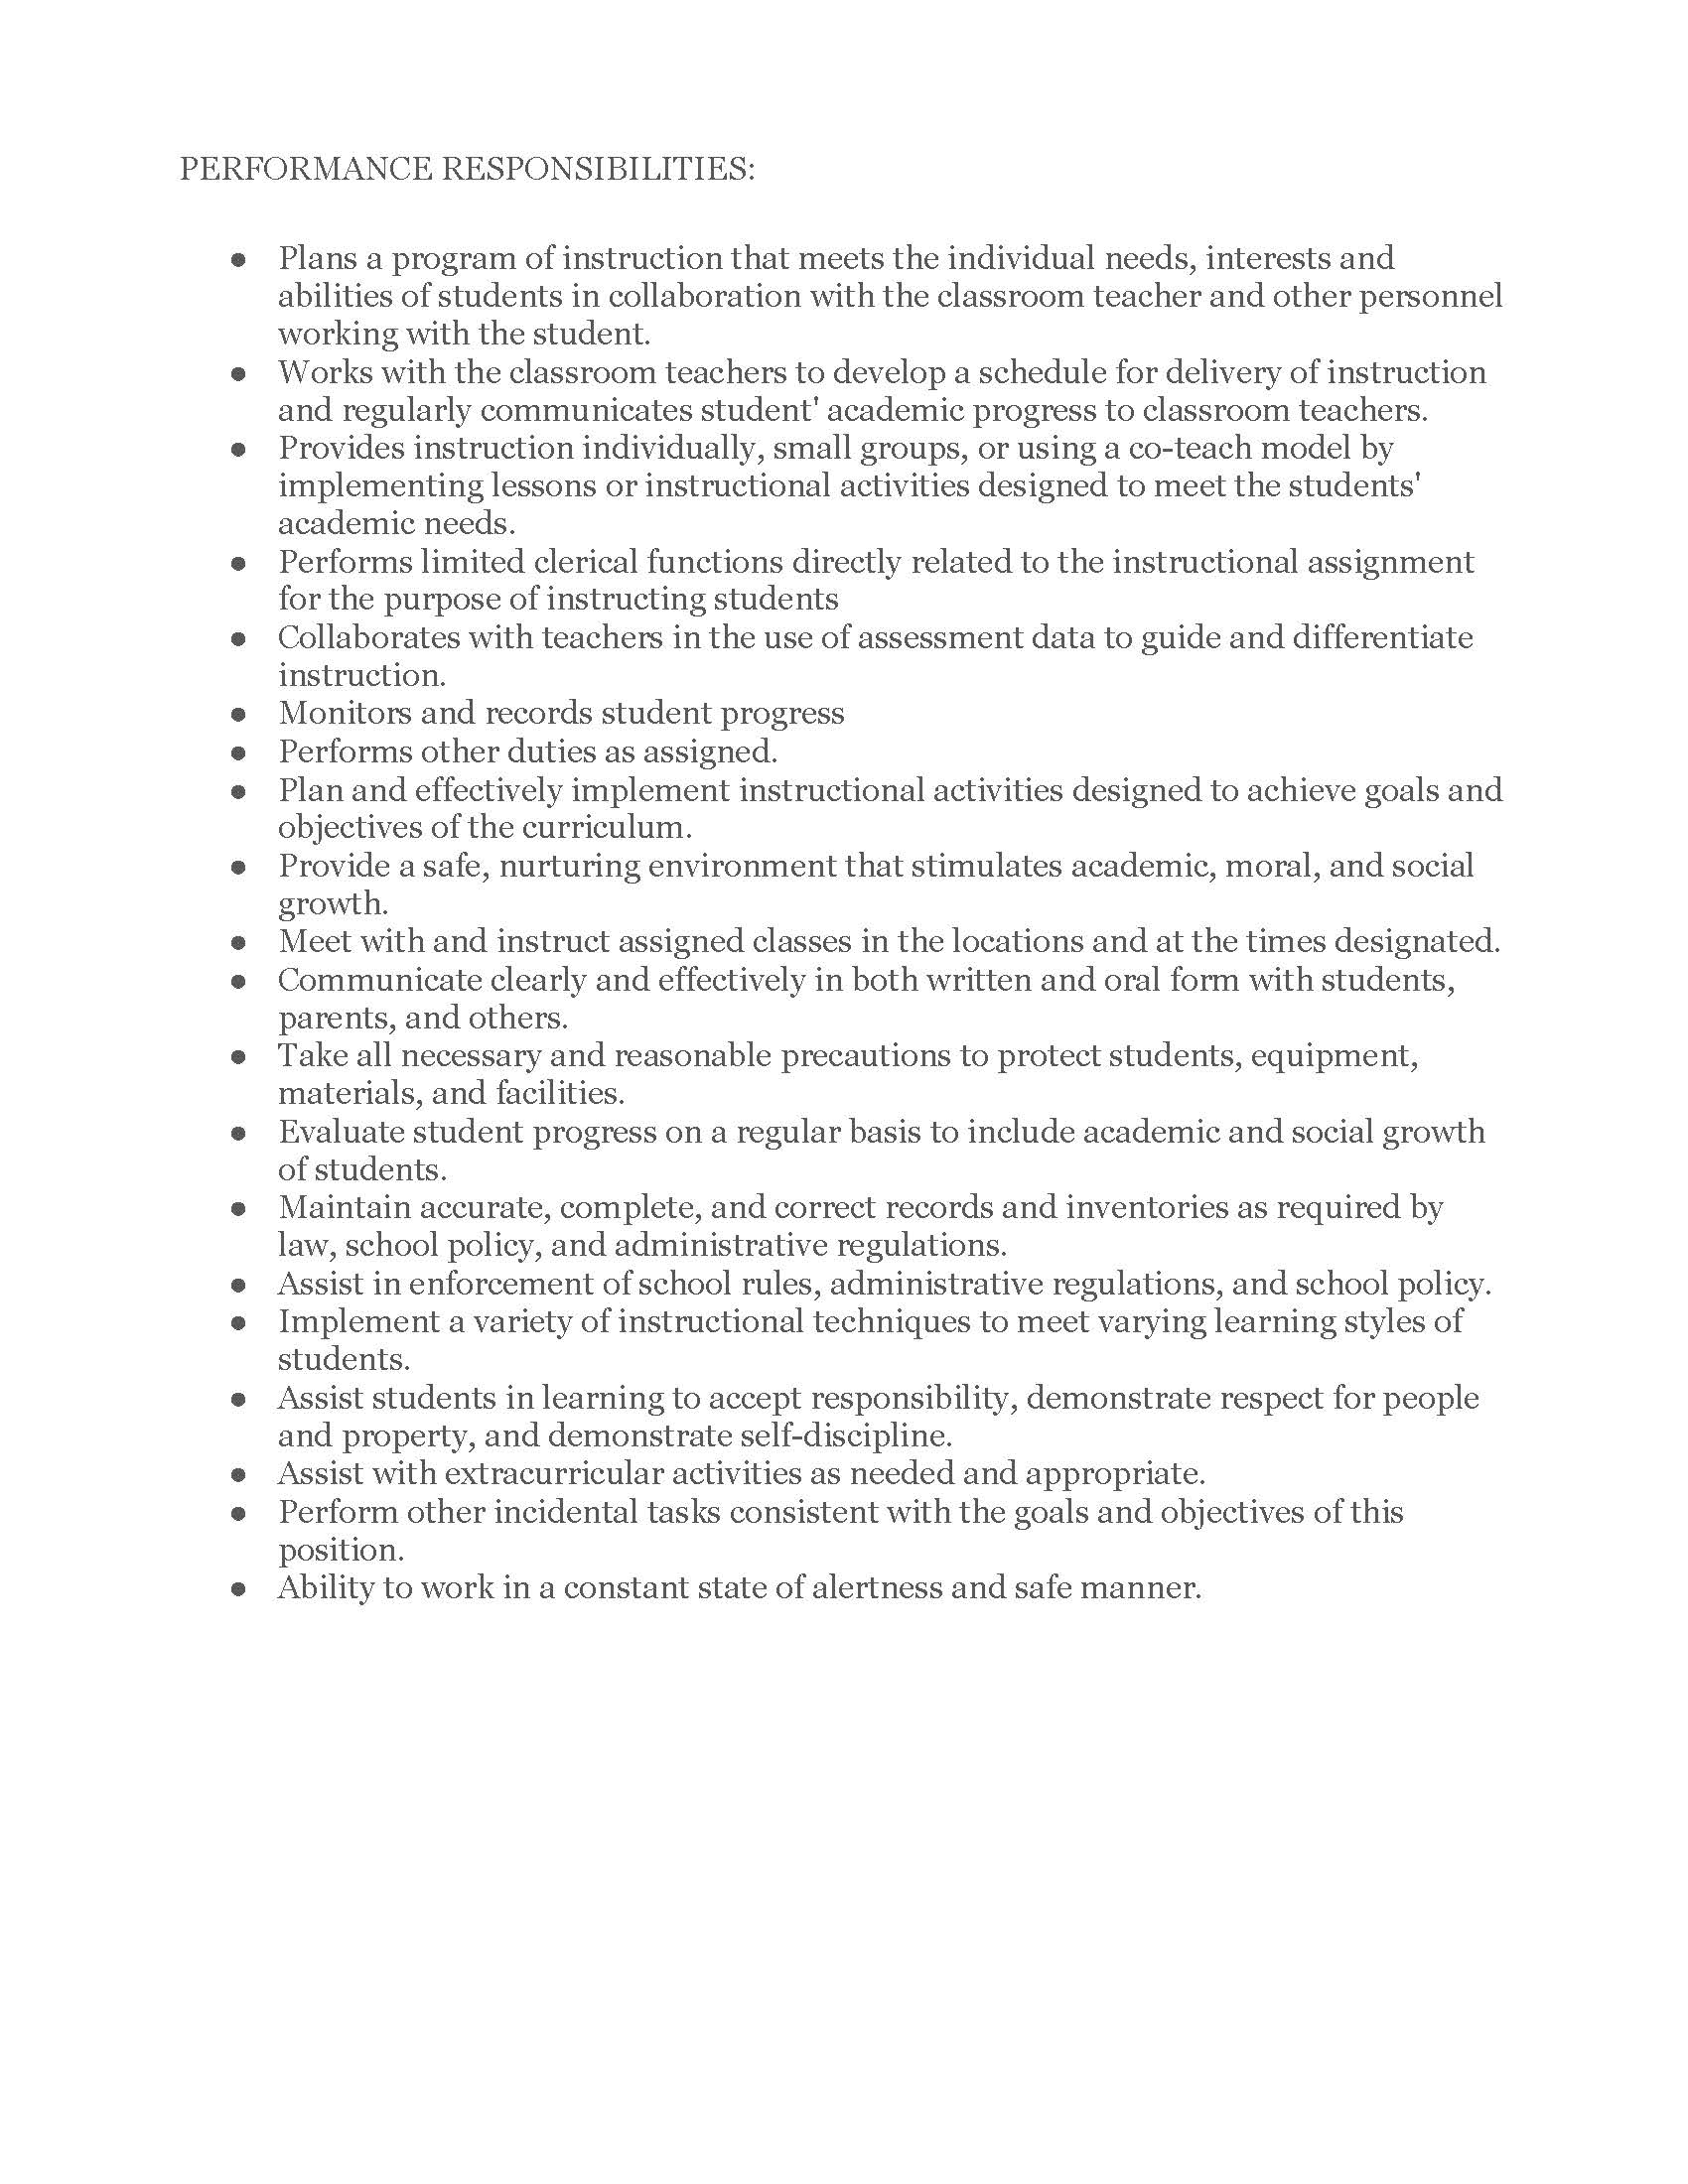 Elementary Teacher K 3 Job Description - Page 2